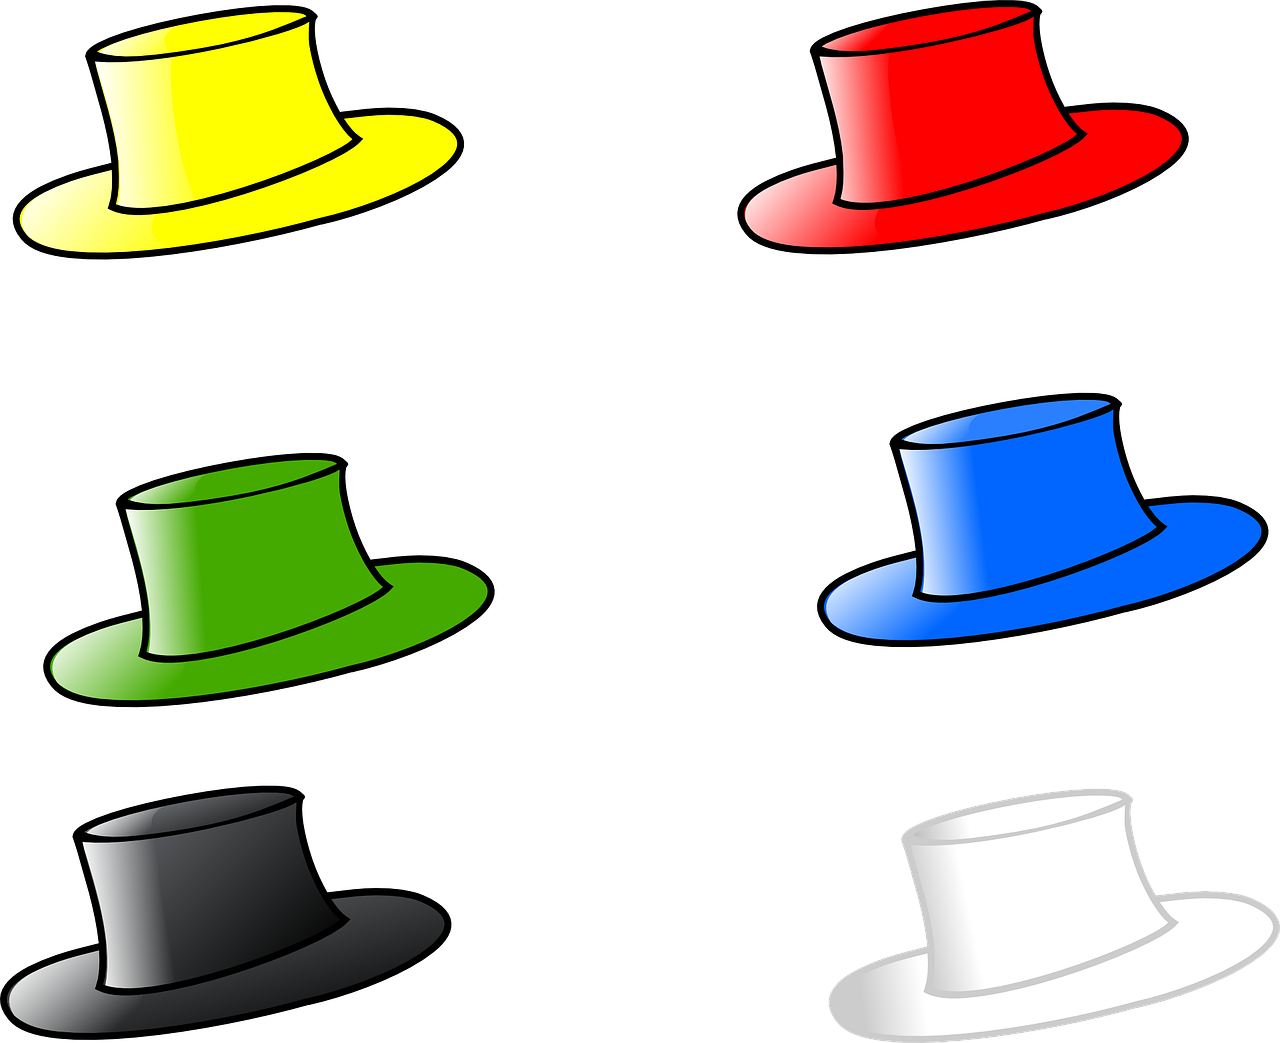 Skrybėlę, Šeši, Skrybėlės, Galva, Dėvėti, Mada, Raudona, Juoda, Mėlynas, Geltona